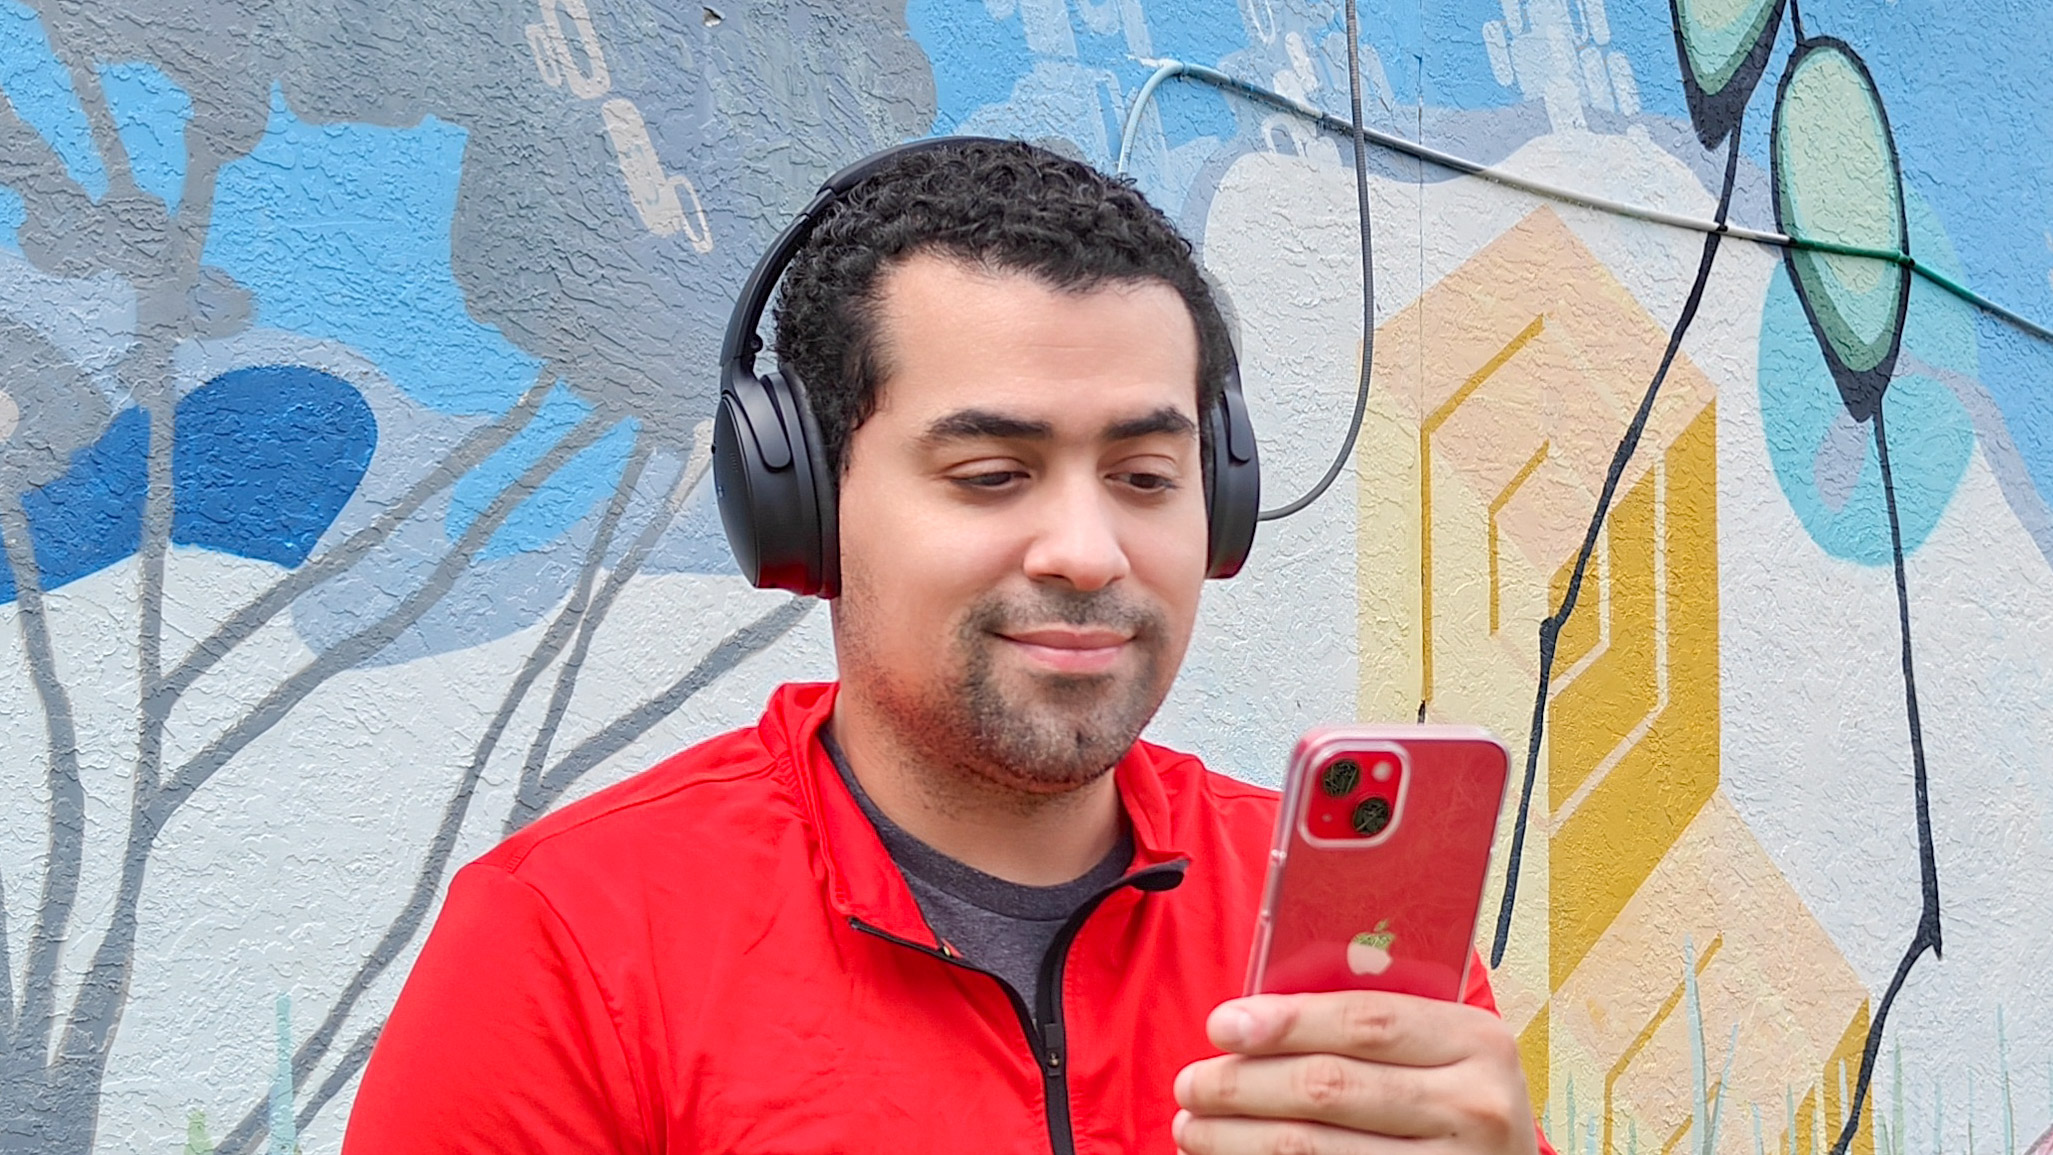 Testing call quality on the Bose QuietComfort Headphones